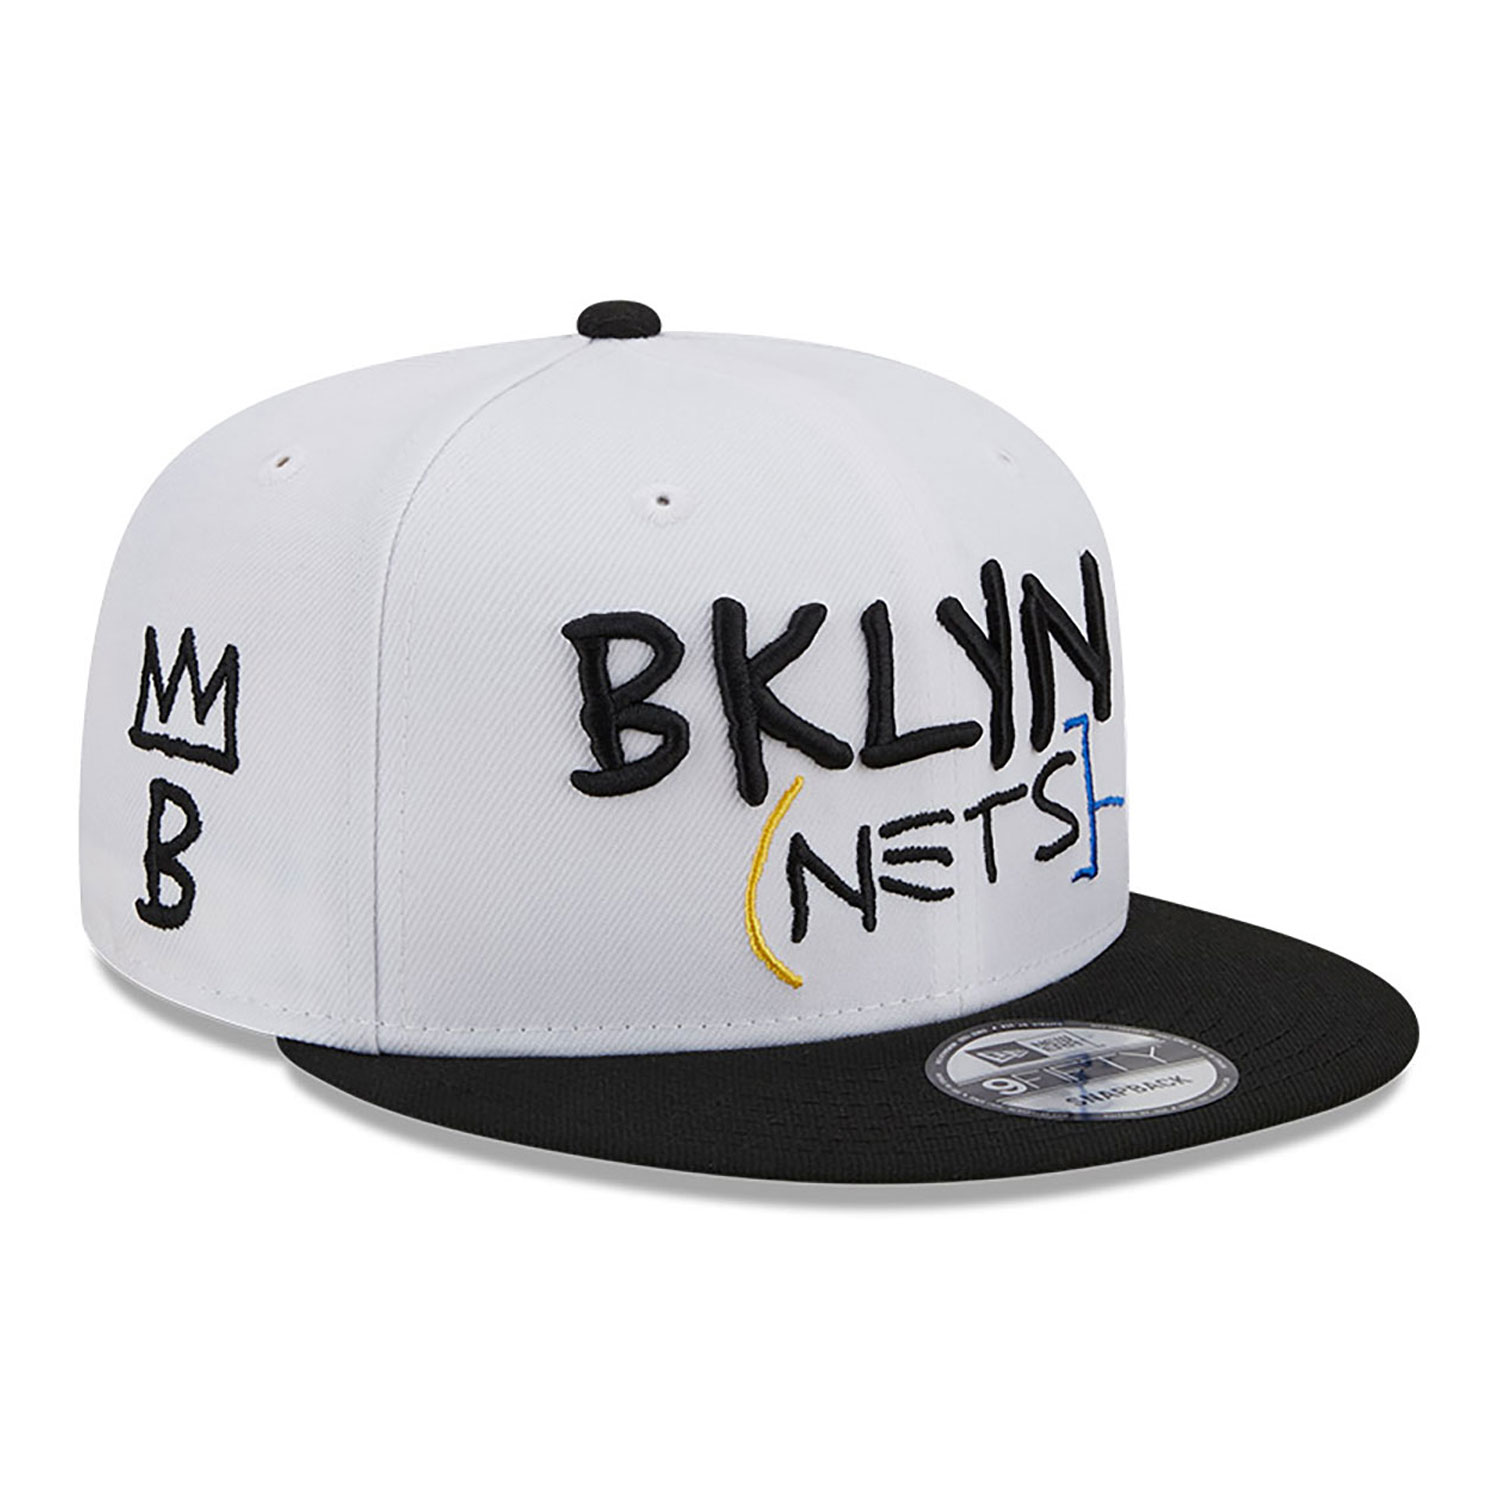 Brooklyn Nets Authentics City Edition White 9FIFTY Snapback Cap